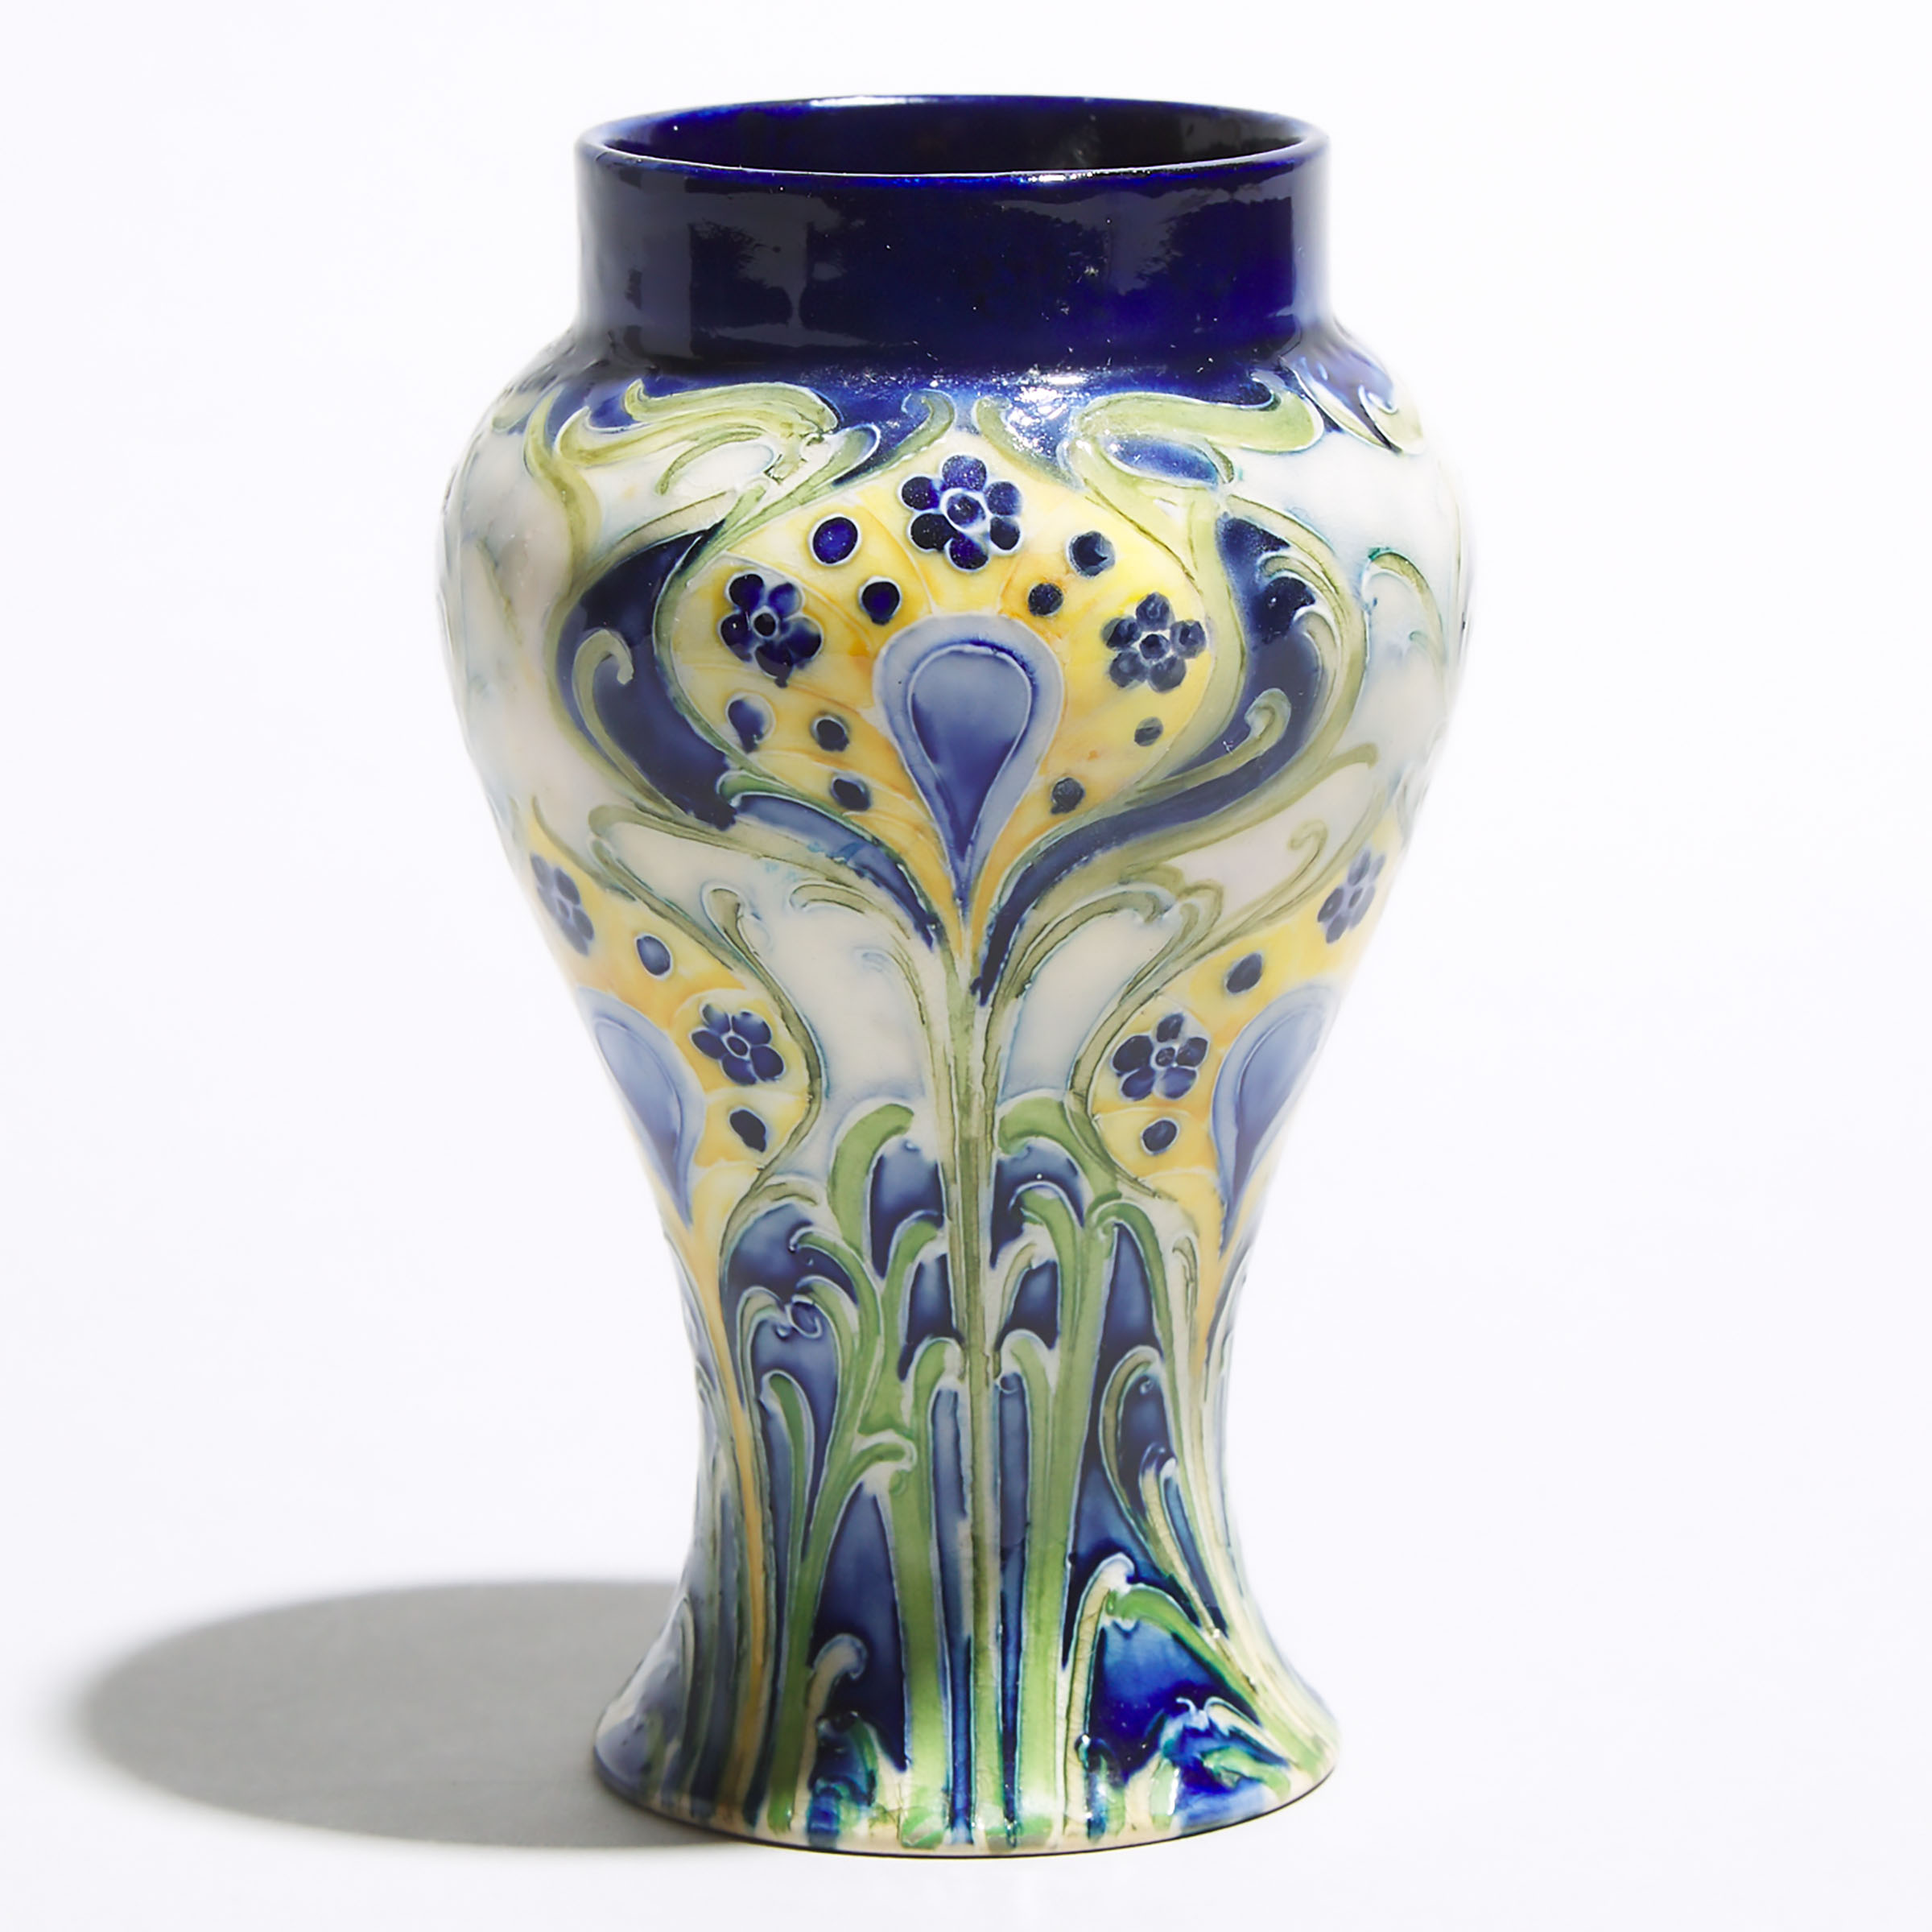 Macintyre Moorcroft Florian Peacock Feather Vase, c.1900-02